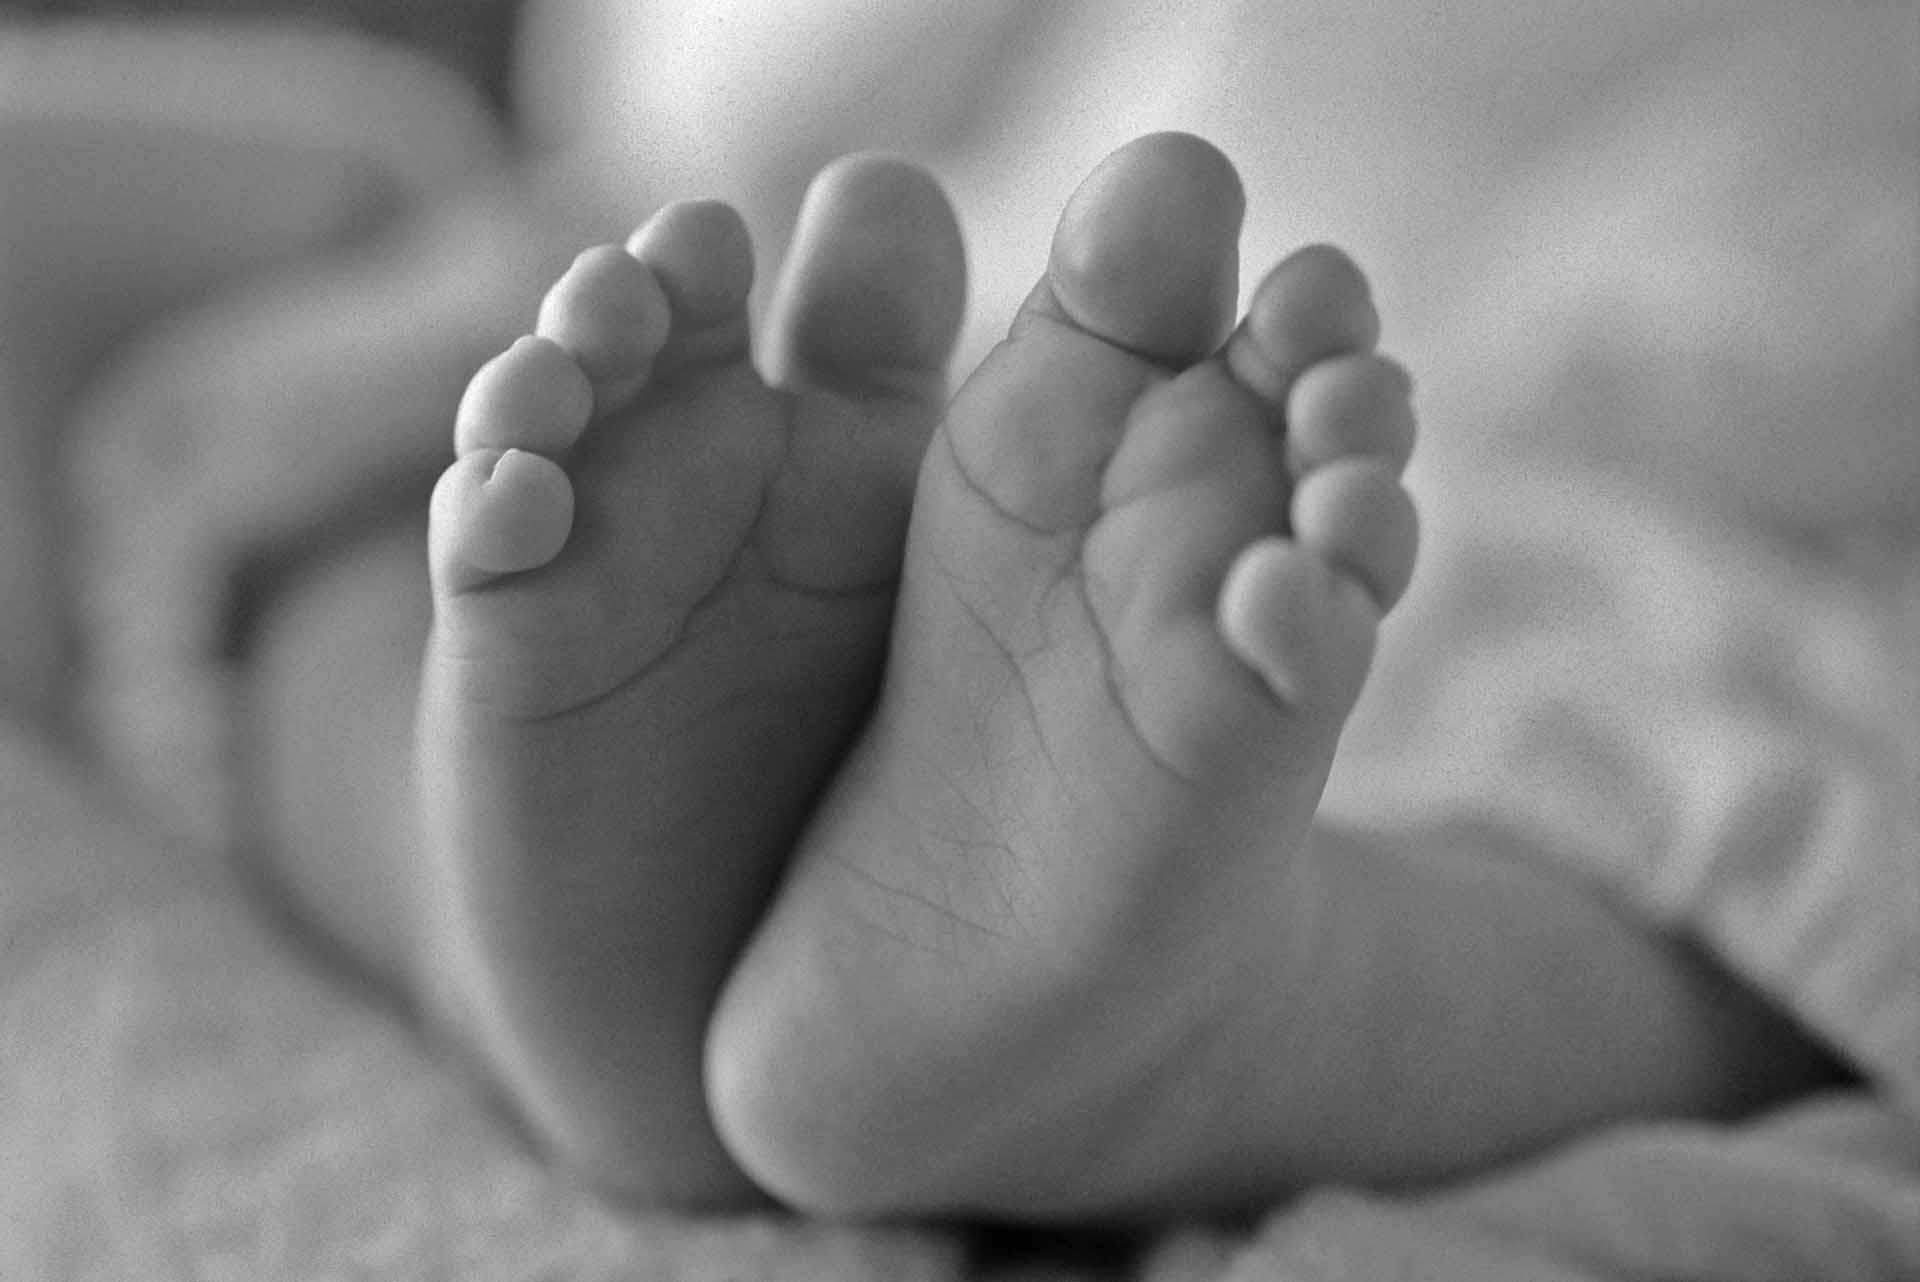 Newborn baby (0-3 months), close-up of feet